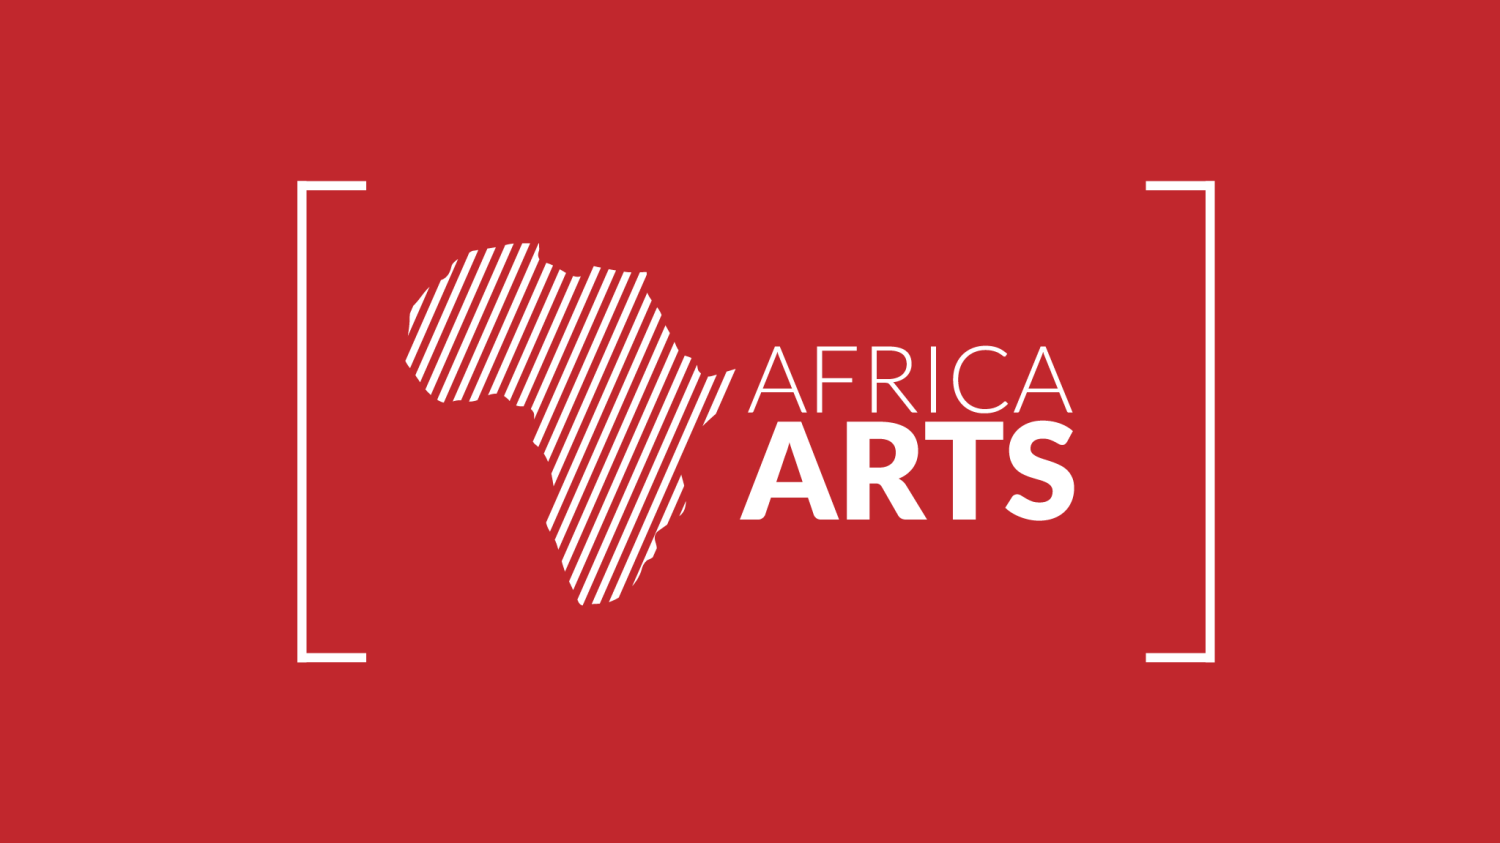 Africa Arts logo